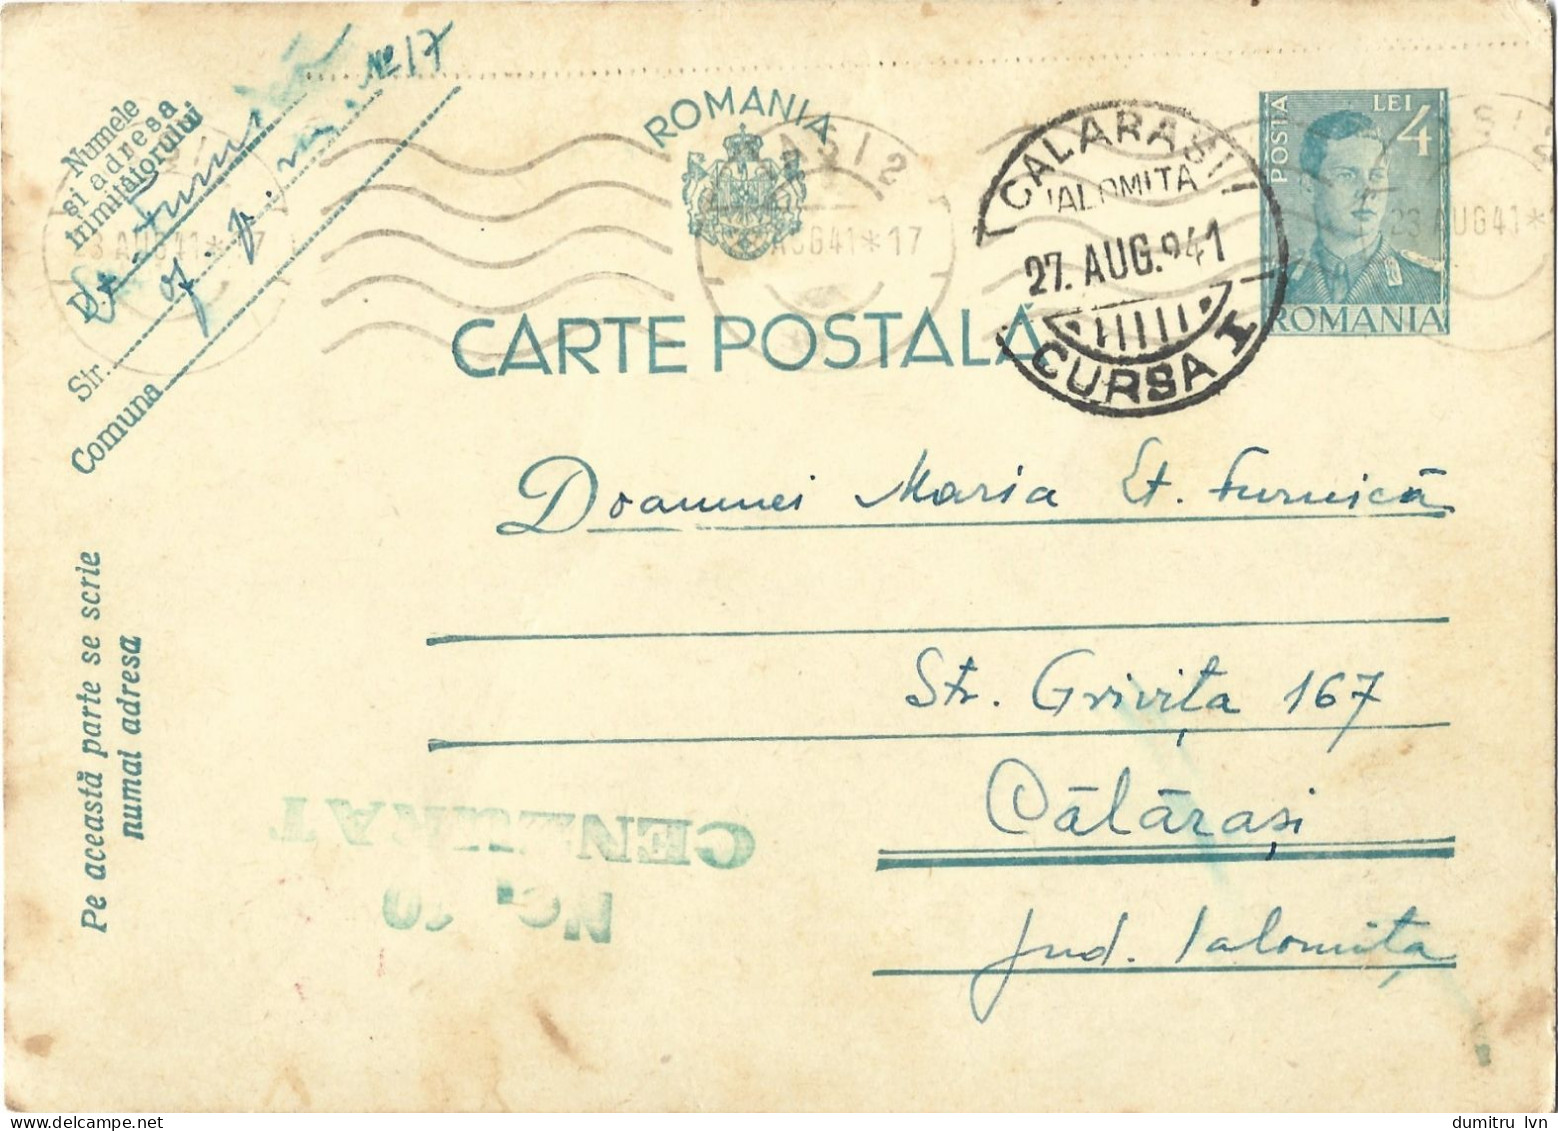 ROMANIA 1941 POSTCARD, CENSORED NO.10 POSTCARD STATIONERY - World War 2 Letters